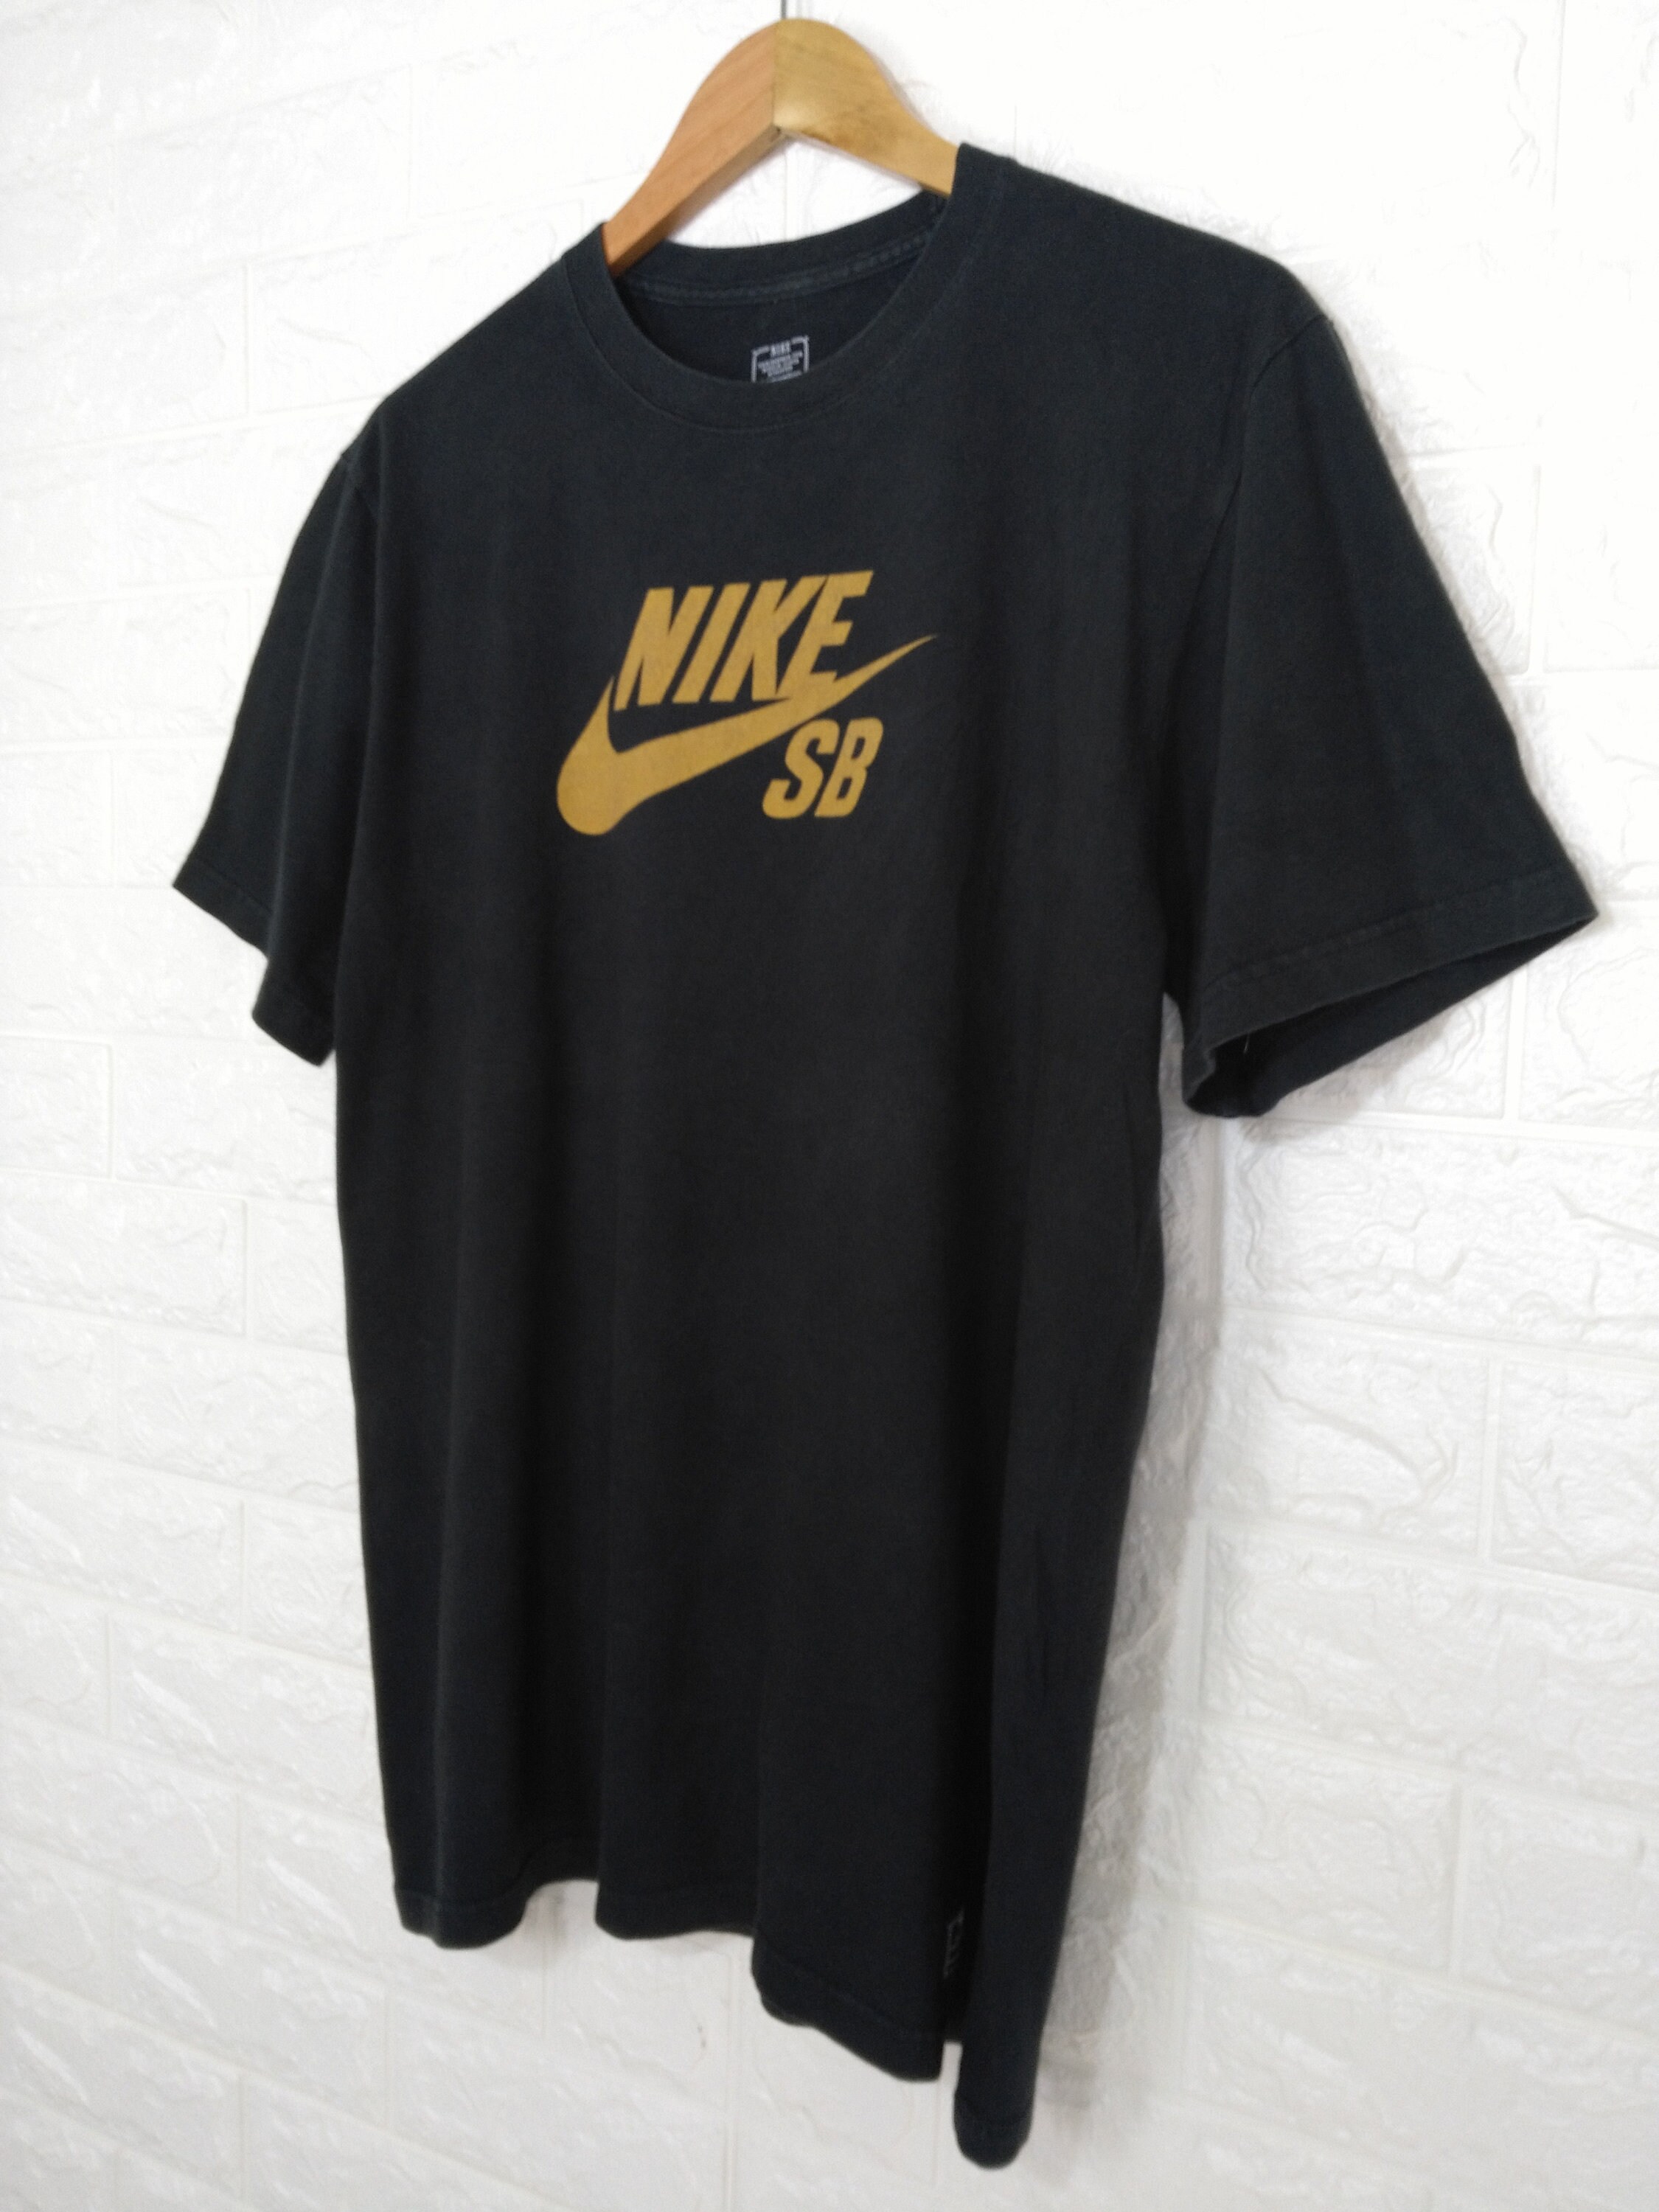 Buy Vintage Nike SB T Shirt Size M Online in India - Etsy